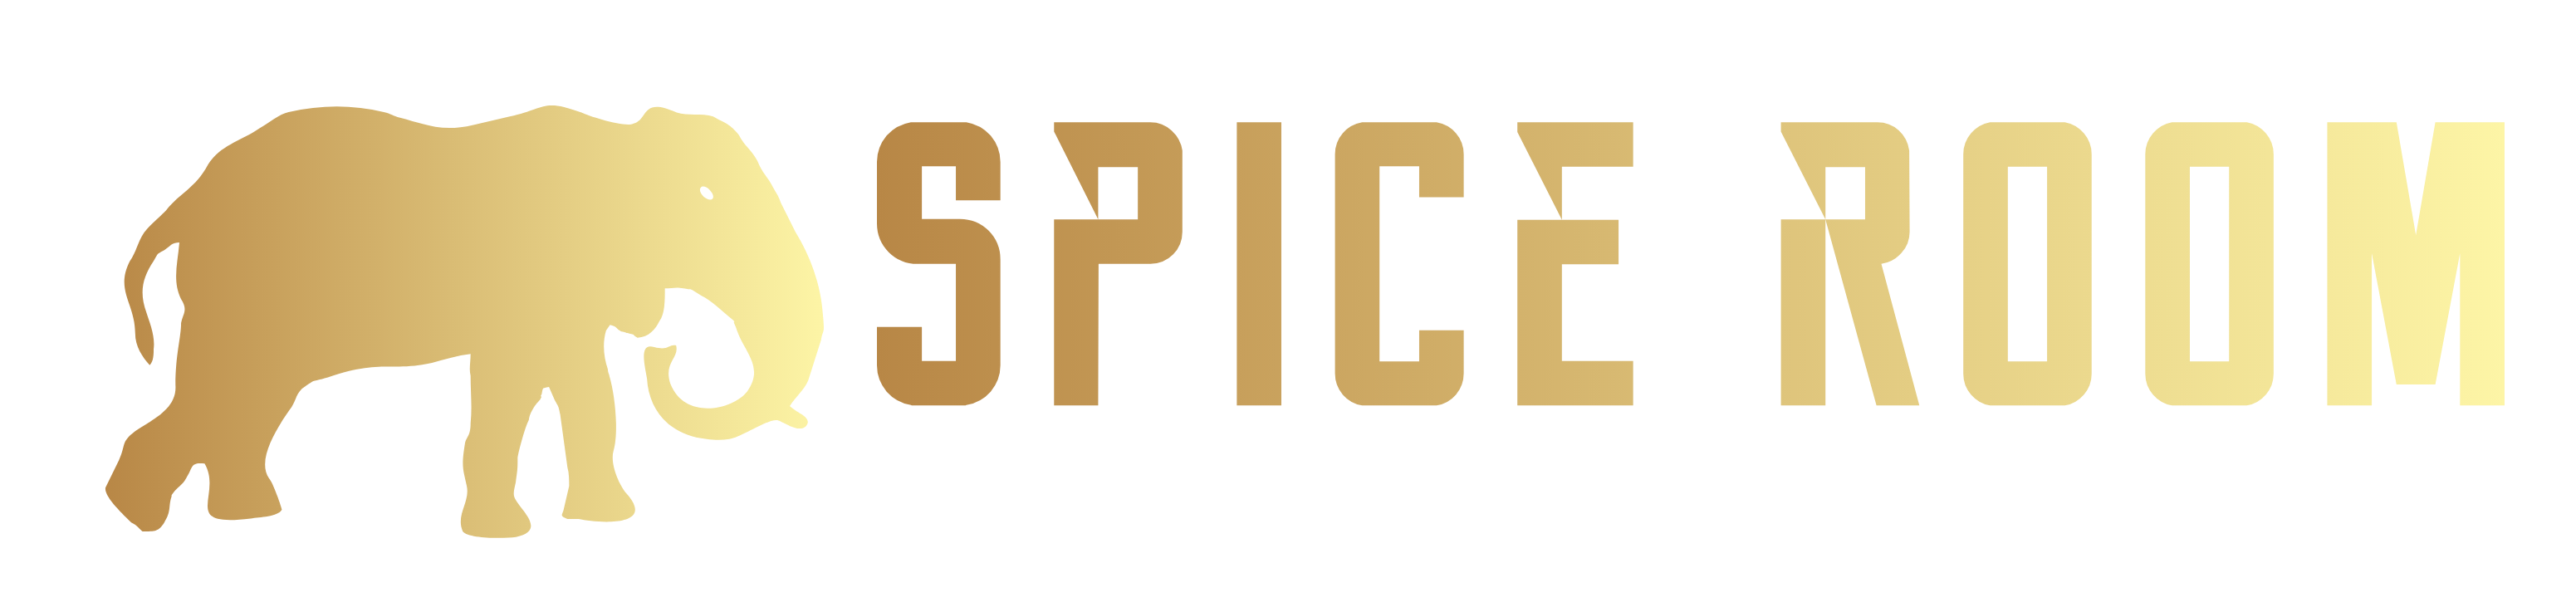 SPICE ROOM | Neighborhood Indian Bistro